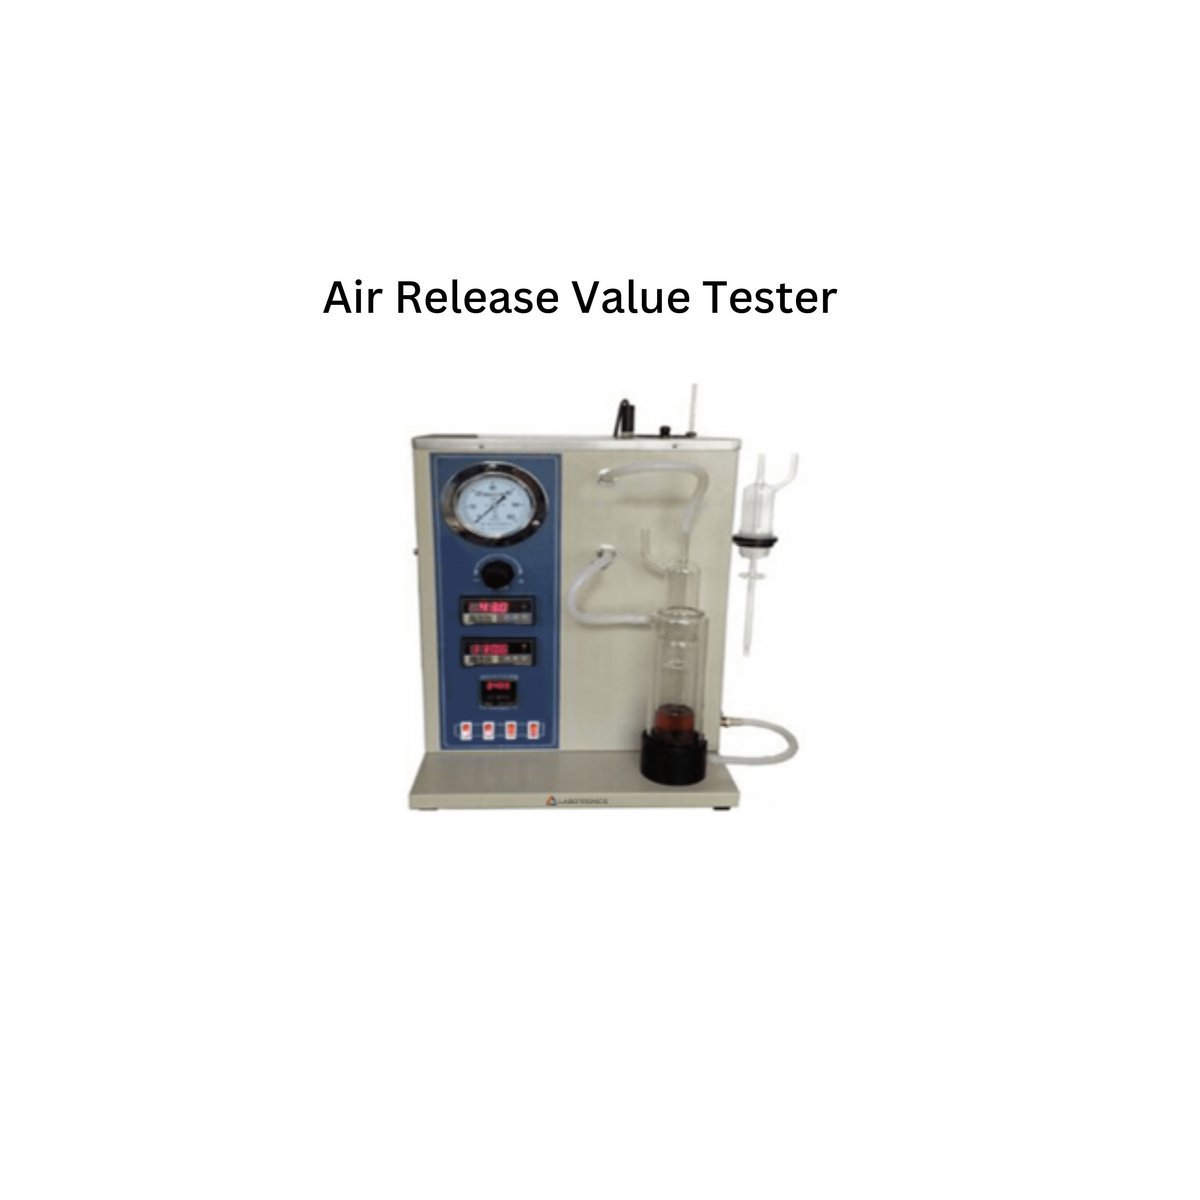 Air Release Value Tester.jpg